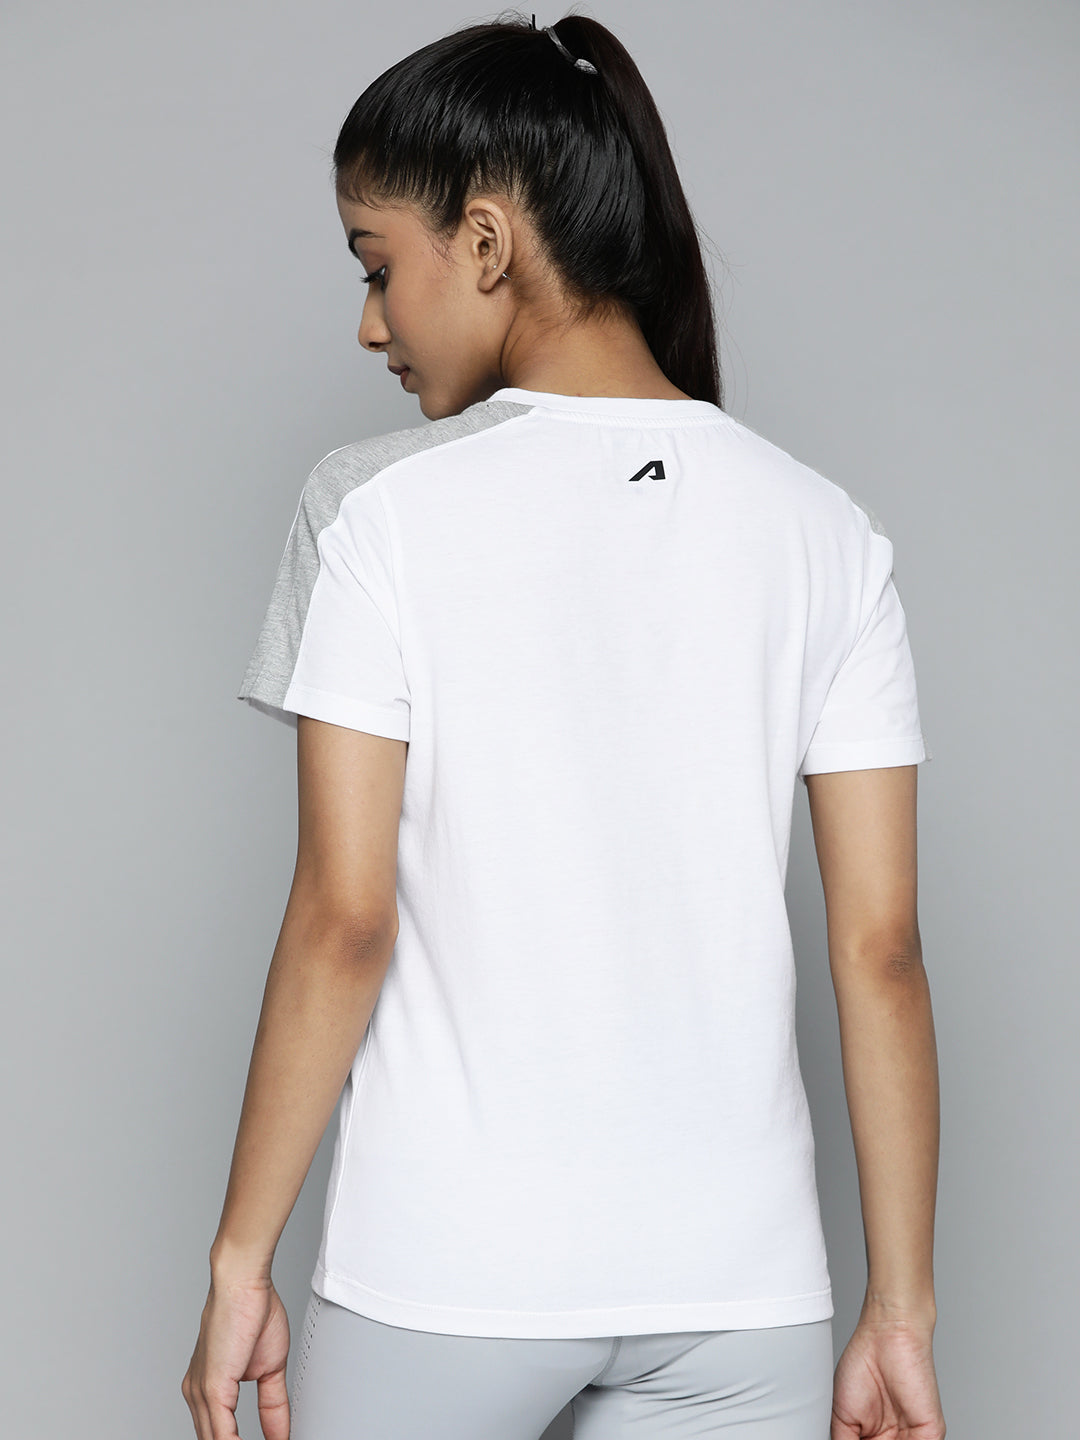 Women White & Black Typography Printed Slim Fit Training or Gym T-shirt